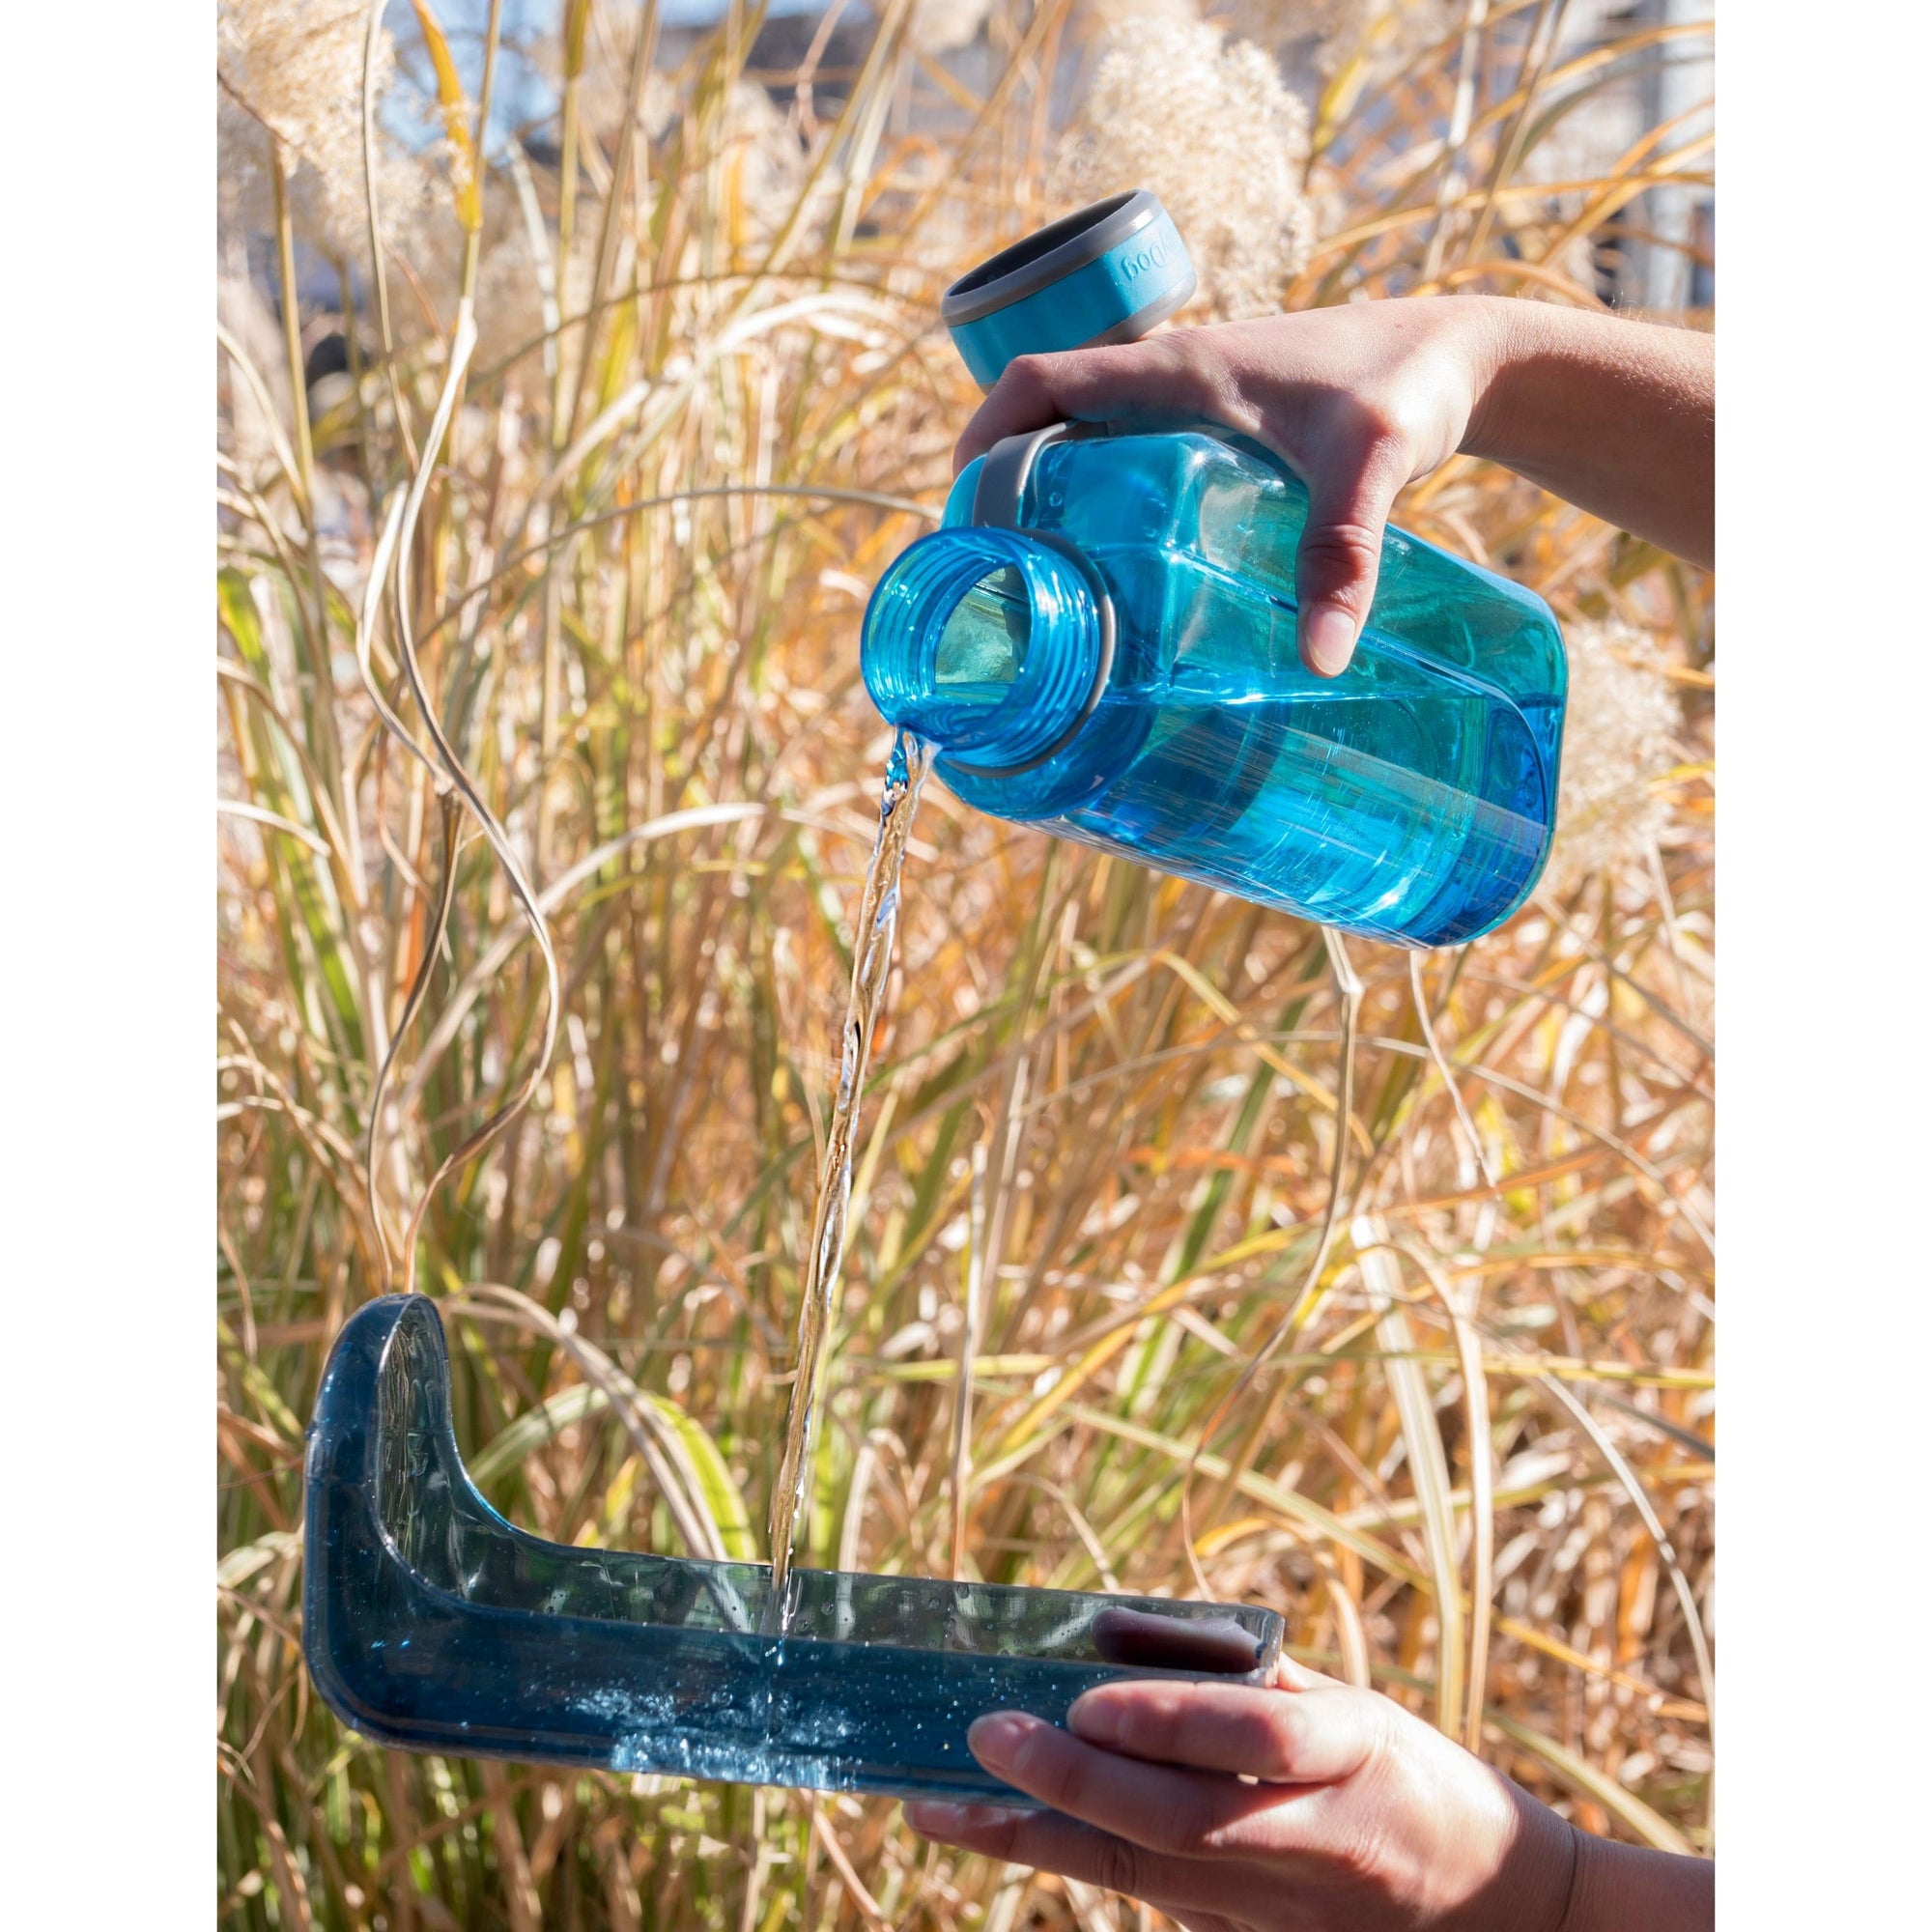 Aquabot Water Bottle Sprayer: High pressure water bottle